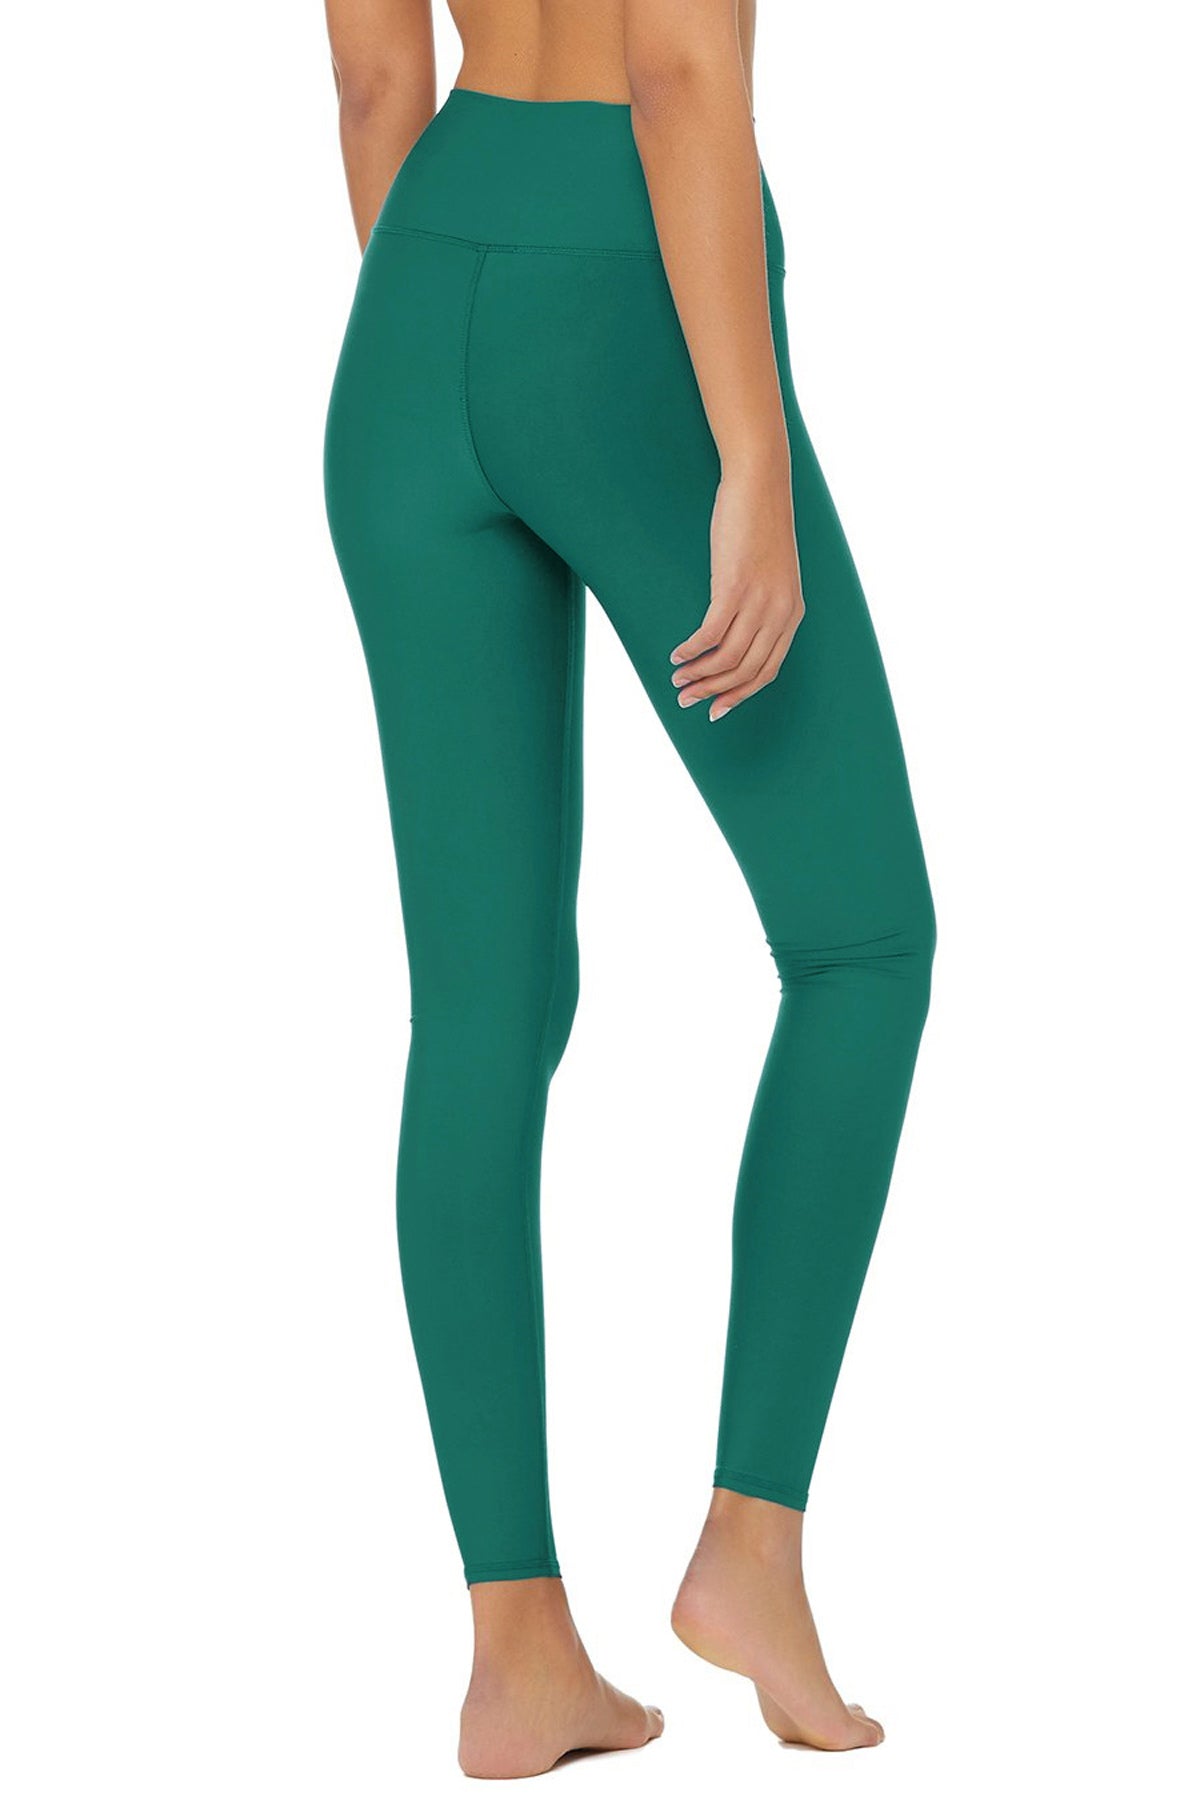 Jade Green UV 50+ Lucy Performance Leggings Yoga Pants - Women - Pineapple Clothing